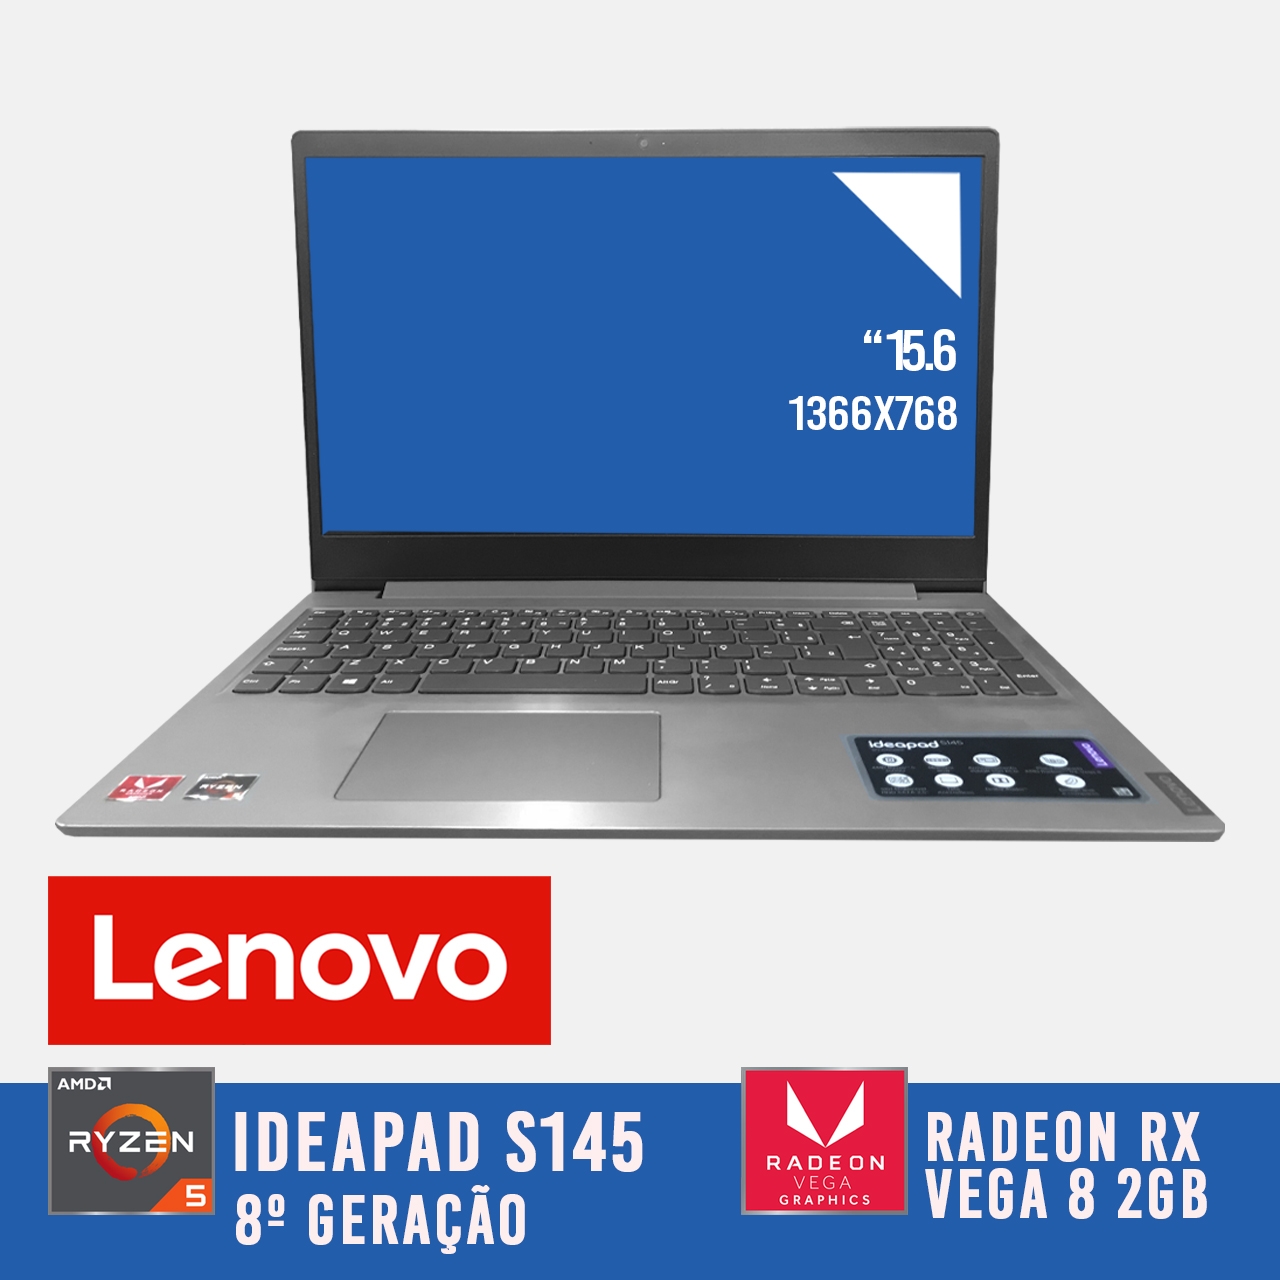 Laptop Lenovo Ideapad S145 AMD Ryzen 5 com AMD Vega 8 2GB de vídeo compartilhado